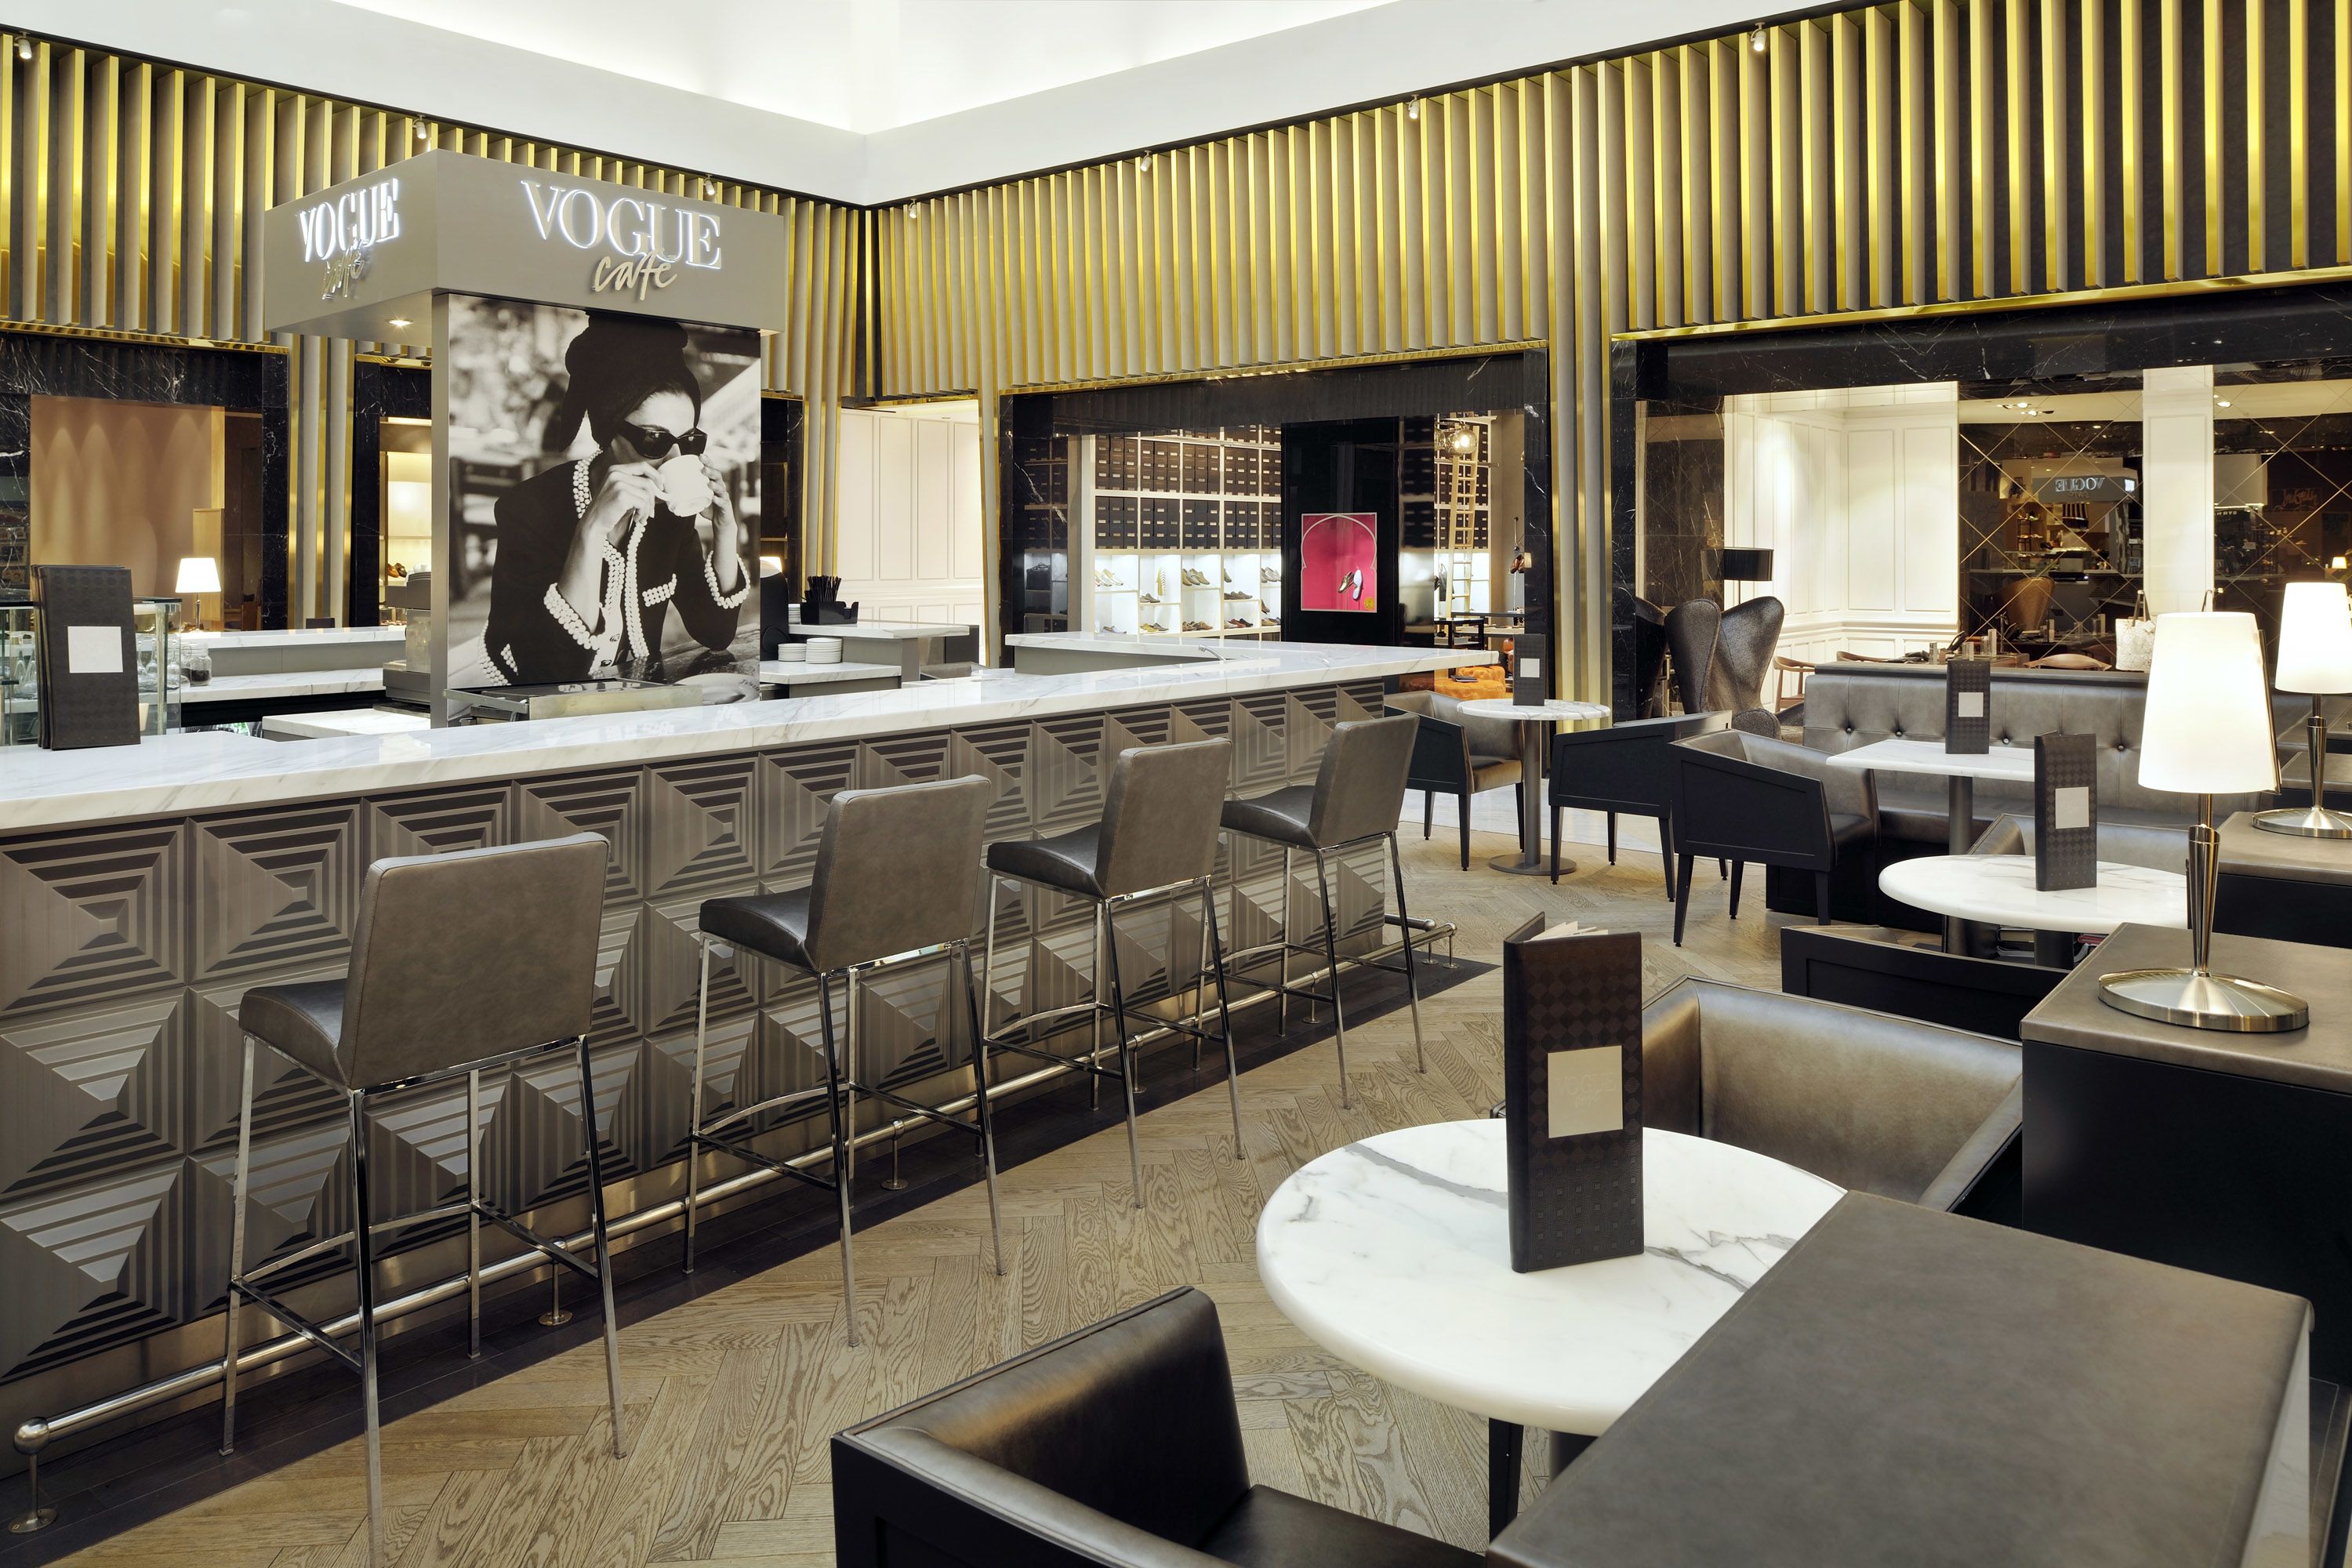 Louis Vuitton opens 'Townhouse' in Selfridges – retail news